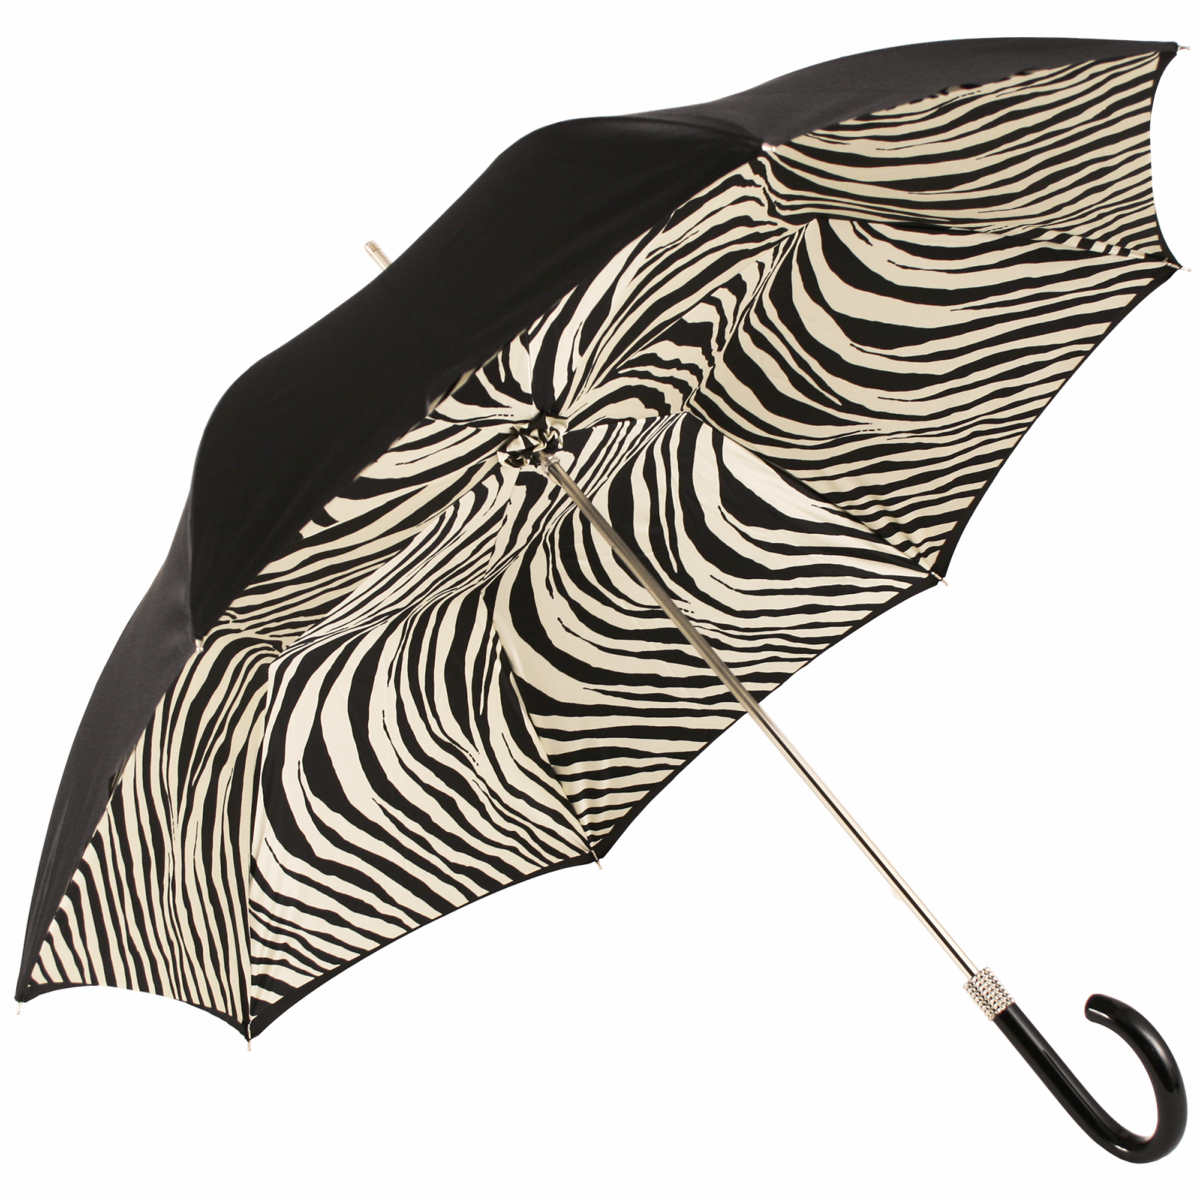 Glamour Zebra Black & White Luxury Double Canopy Umbrella by Pasotti